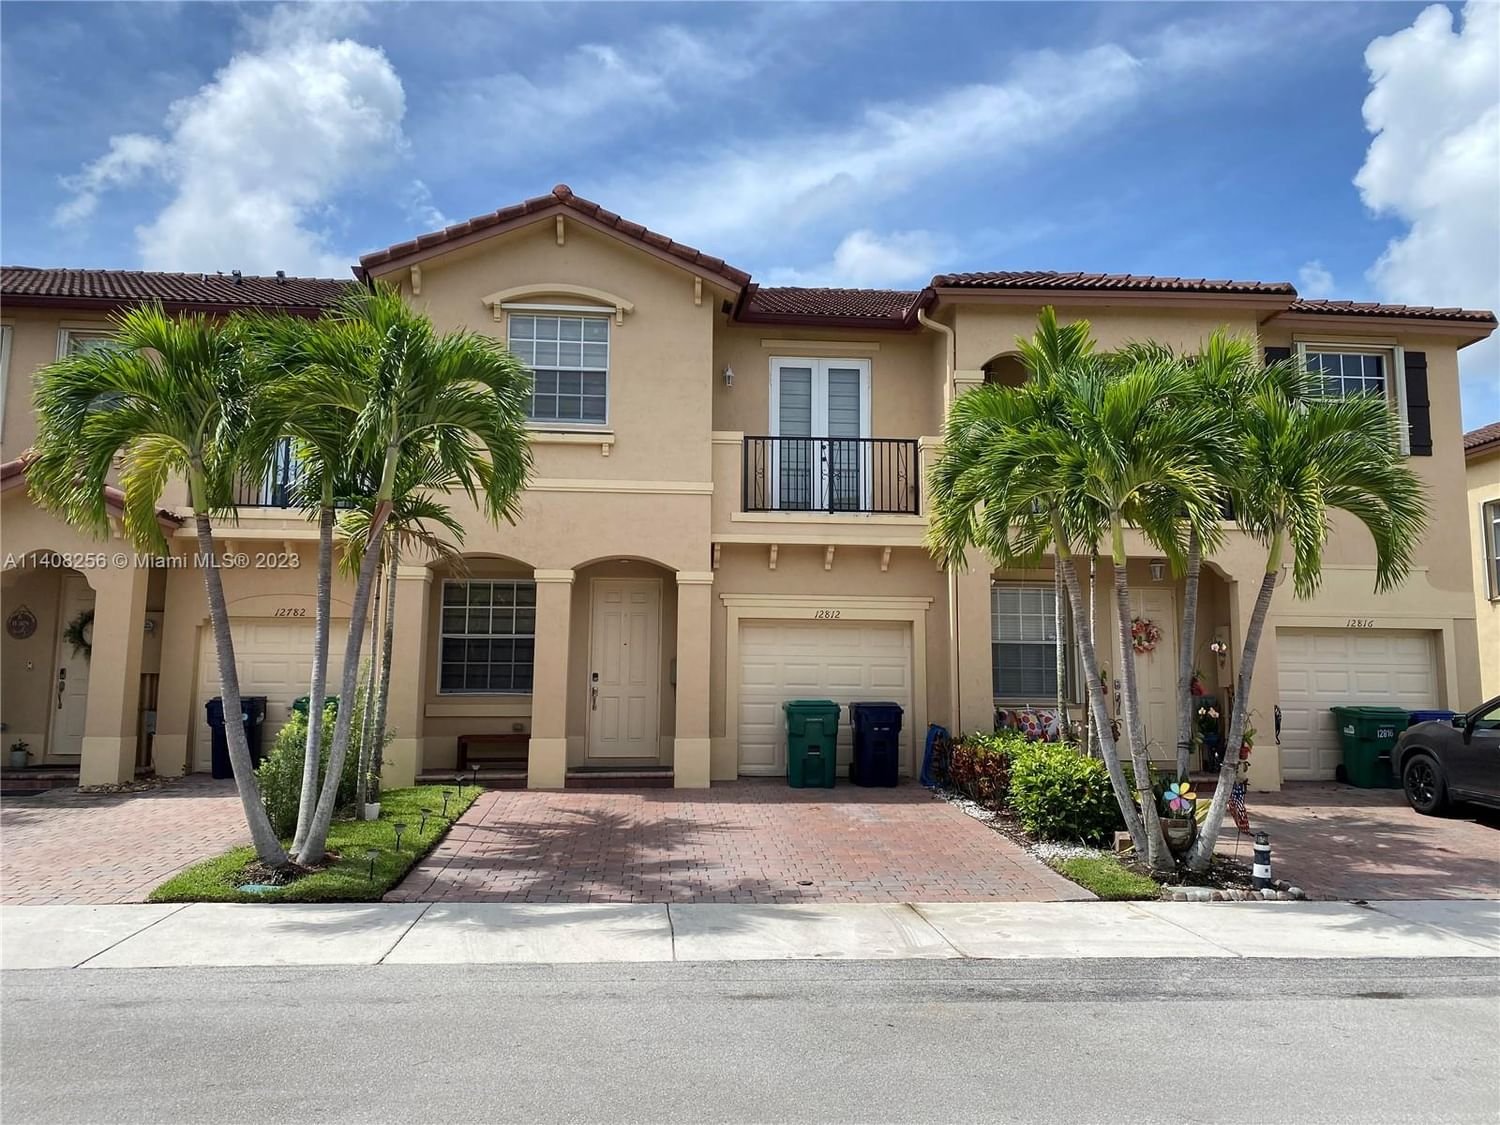 Real estate property located at 12812 134th Ter, Miami-Dade County, Miami, FL